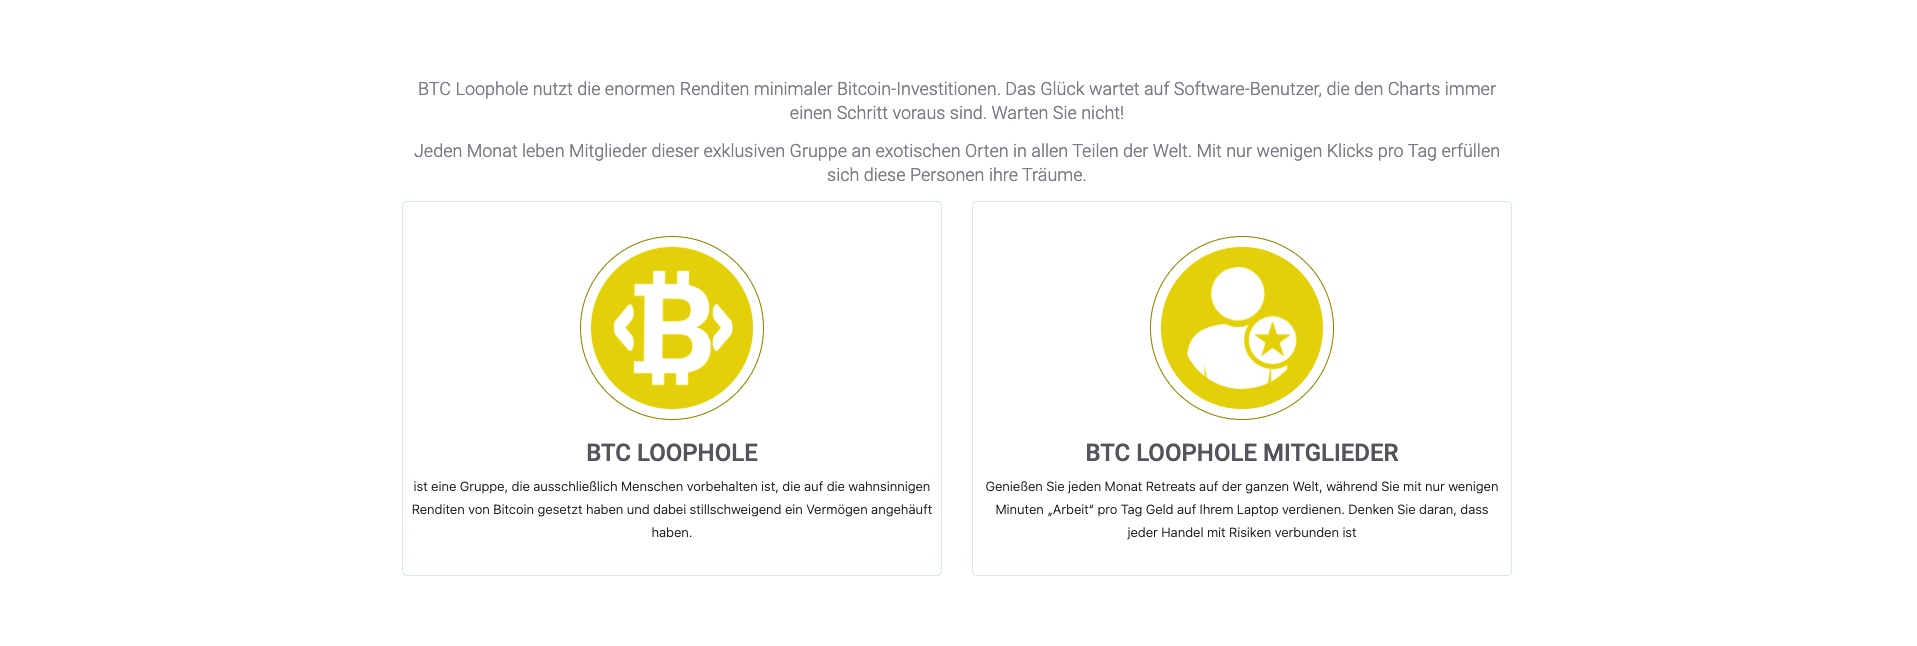 Bitcoin loophole wie funktioniert es